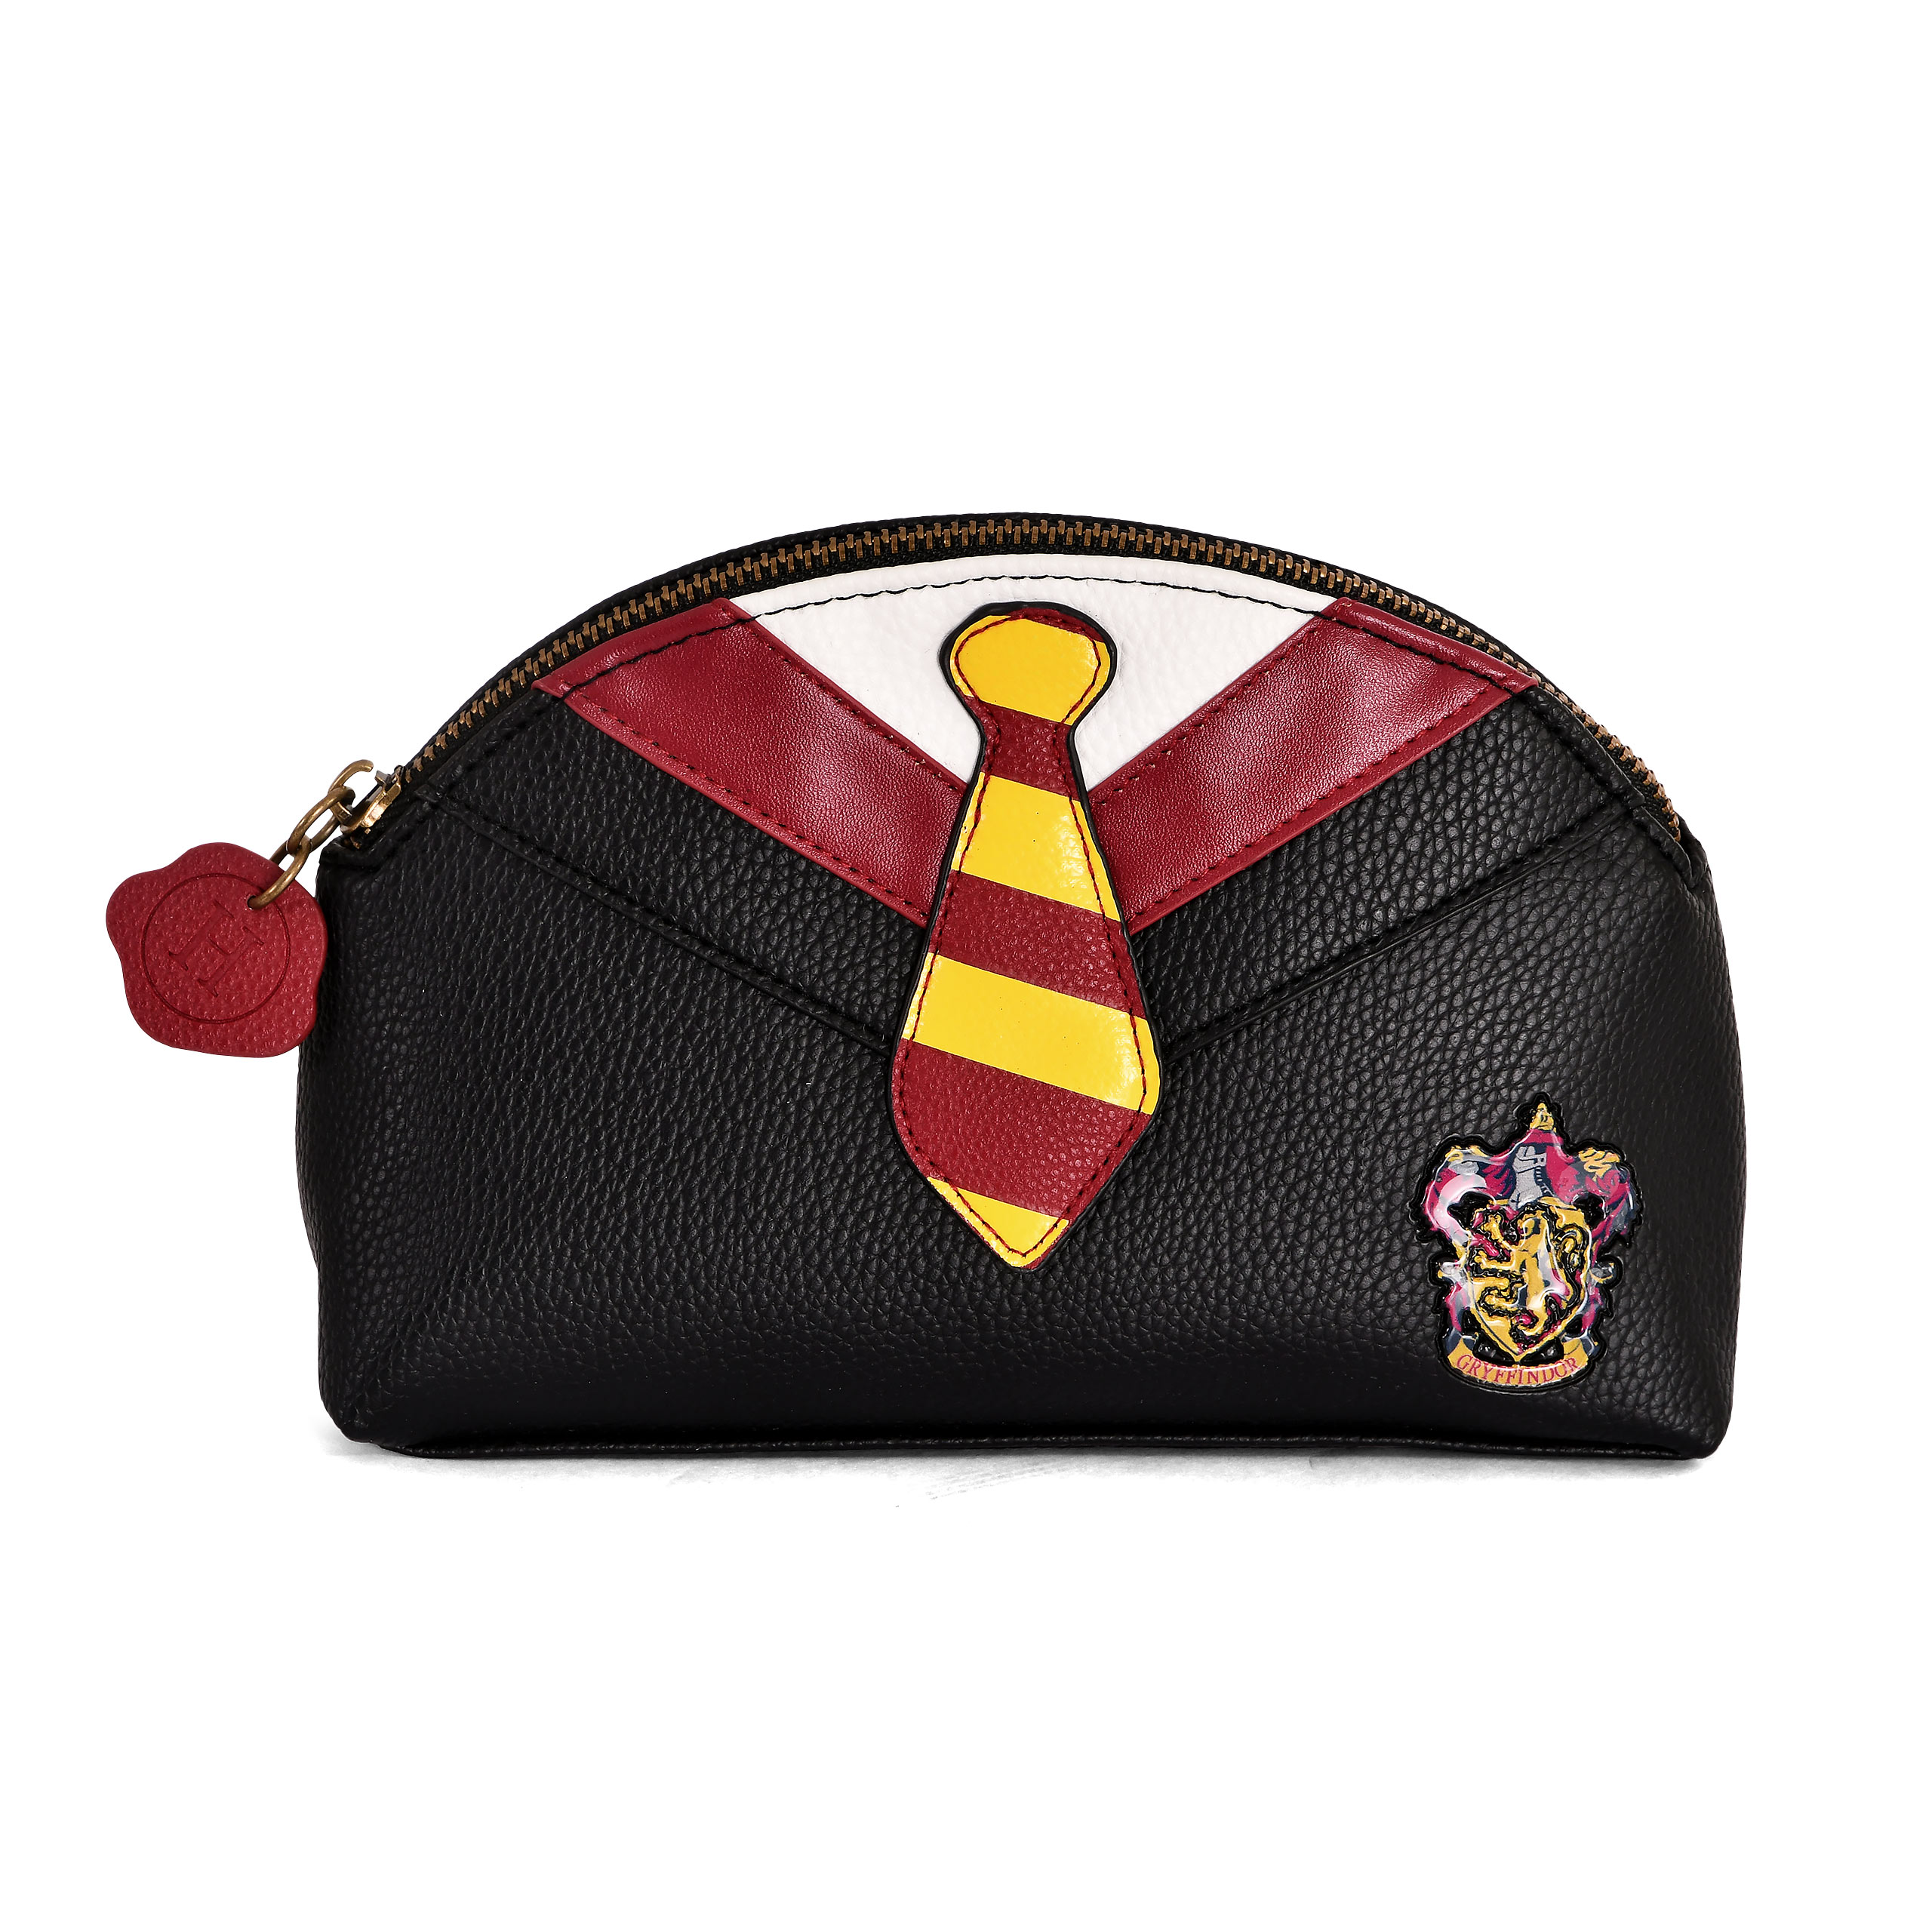 Harry Potter - Gryffindor Suit & Tie Cosmetic Bag